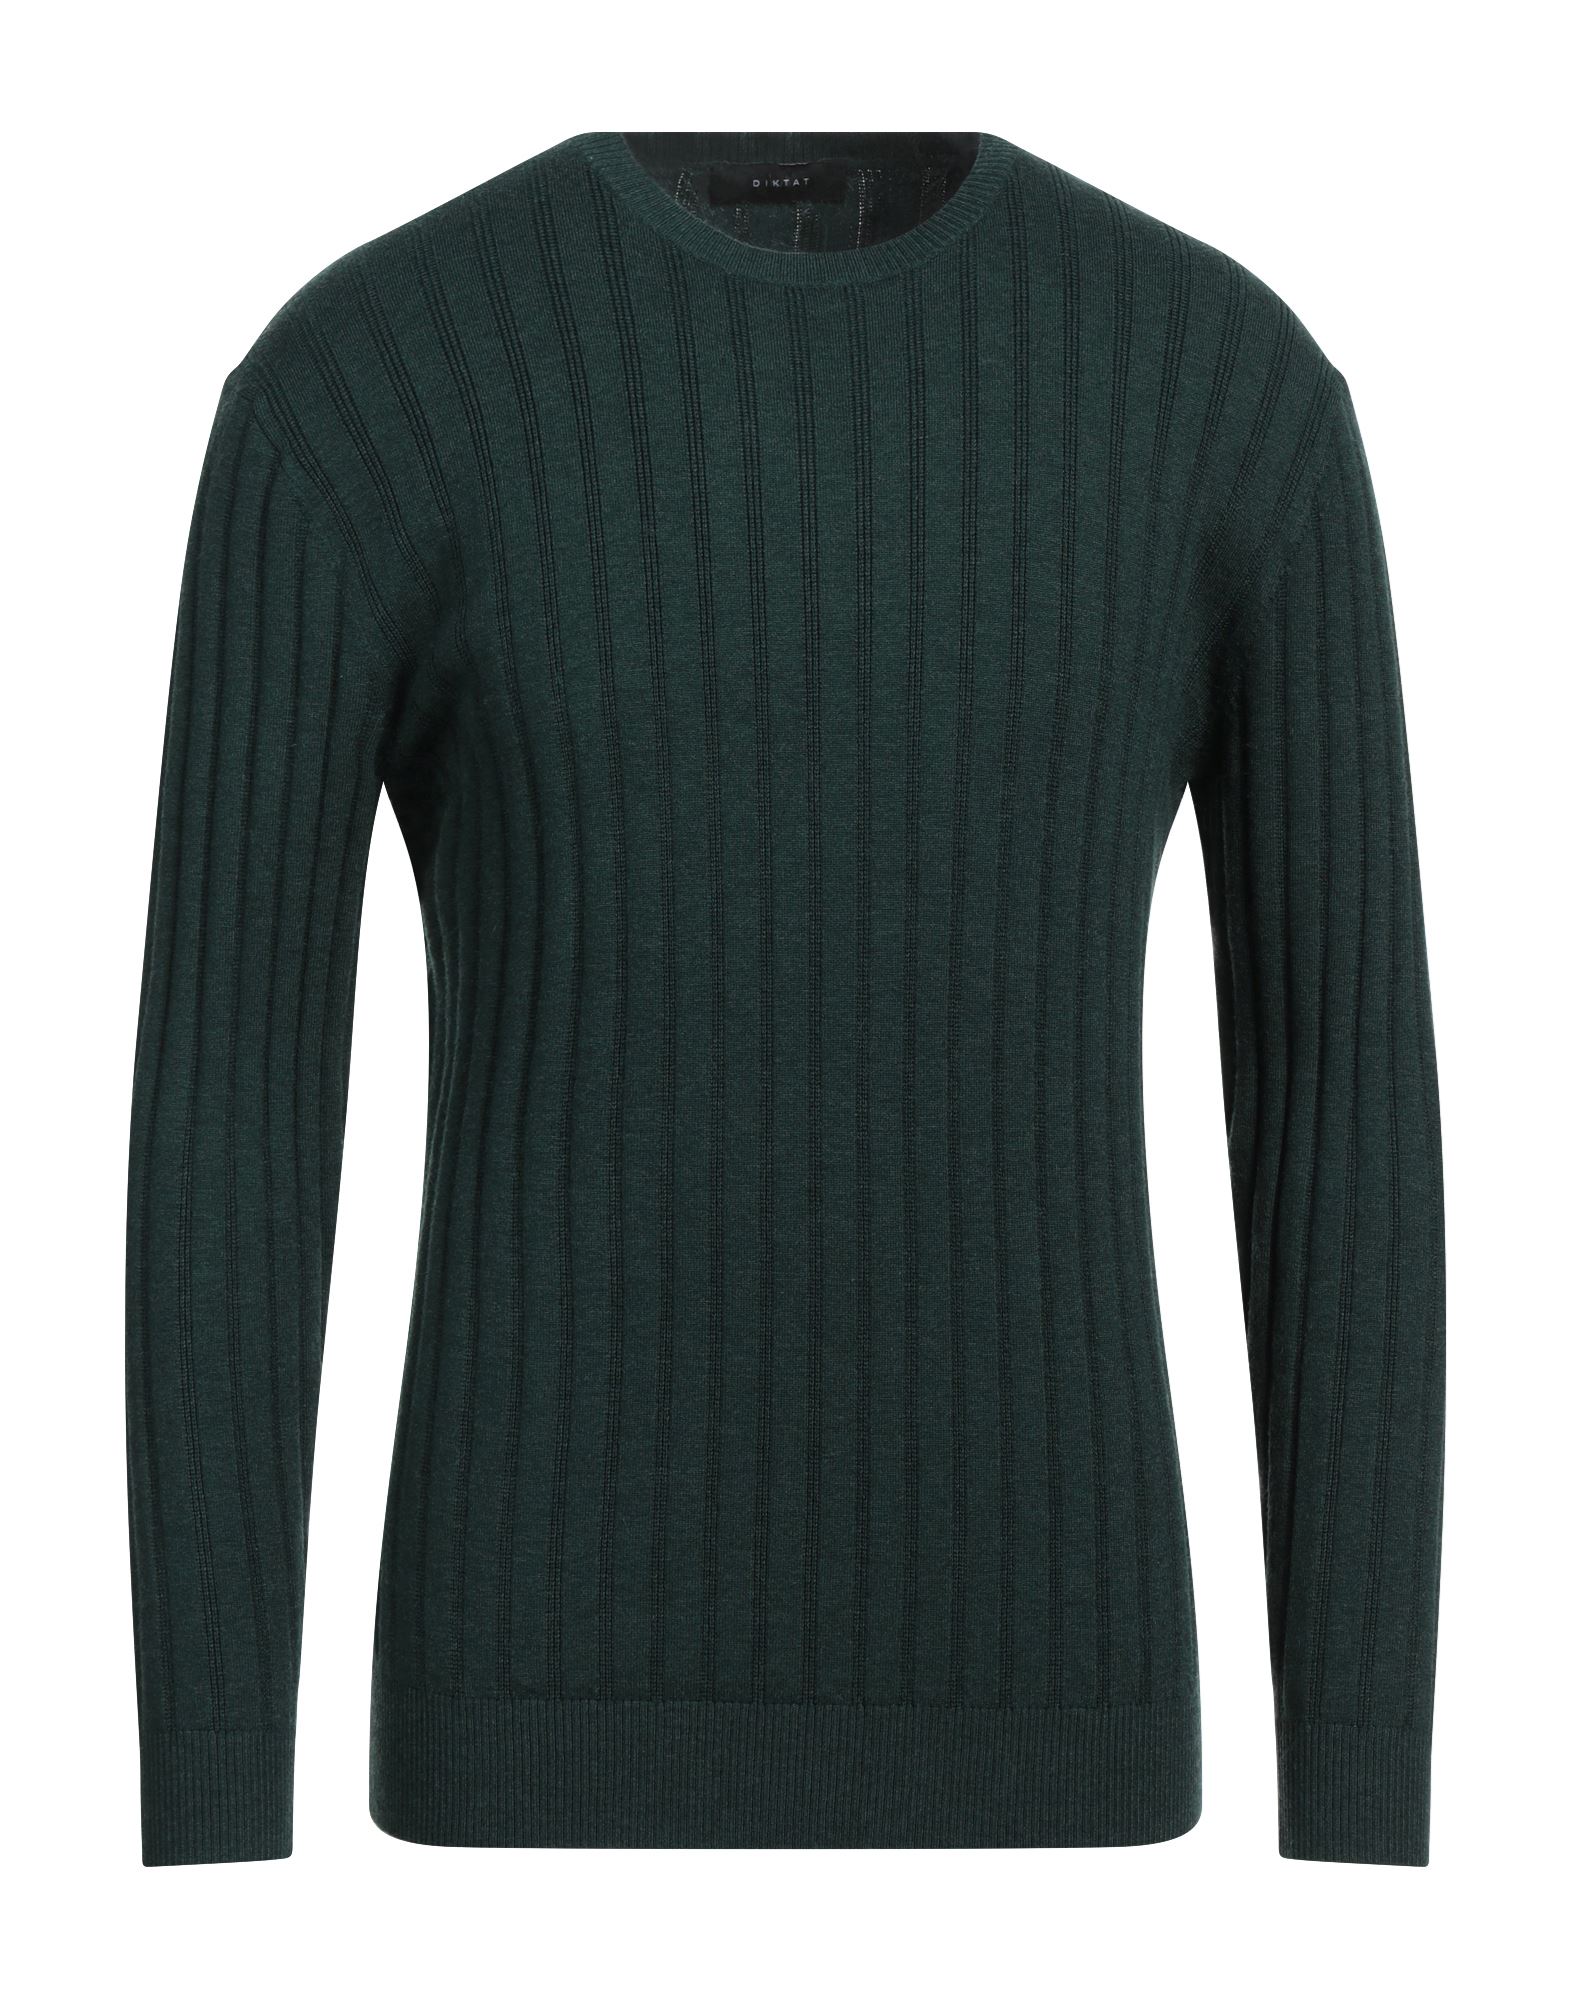 DIKTAT Sweaters | Smart Closet